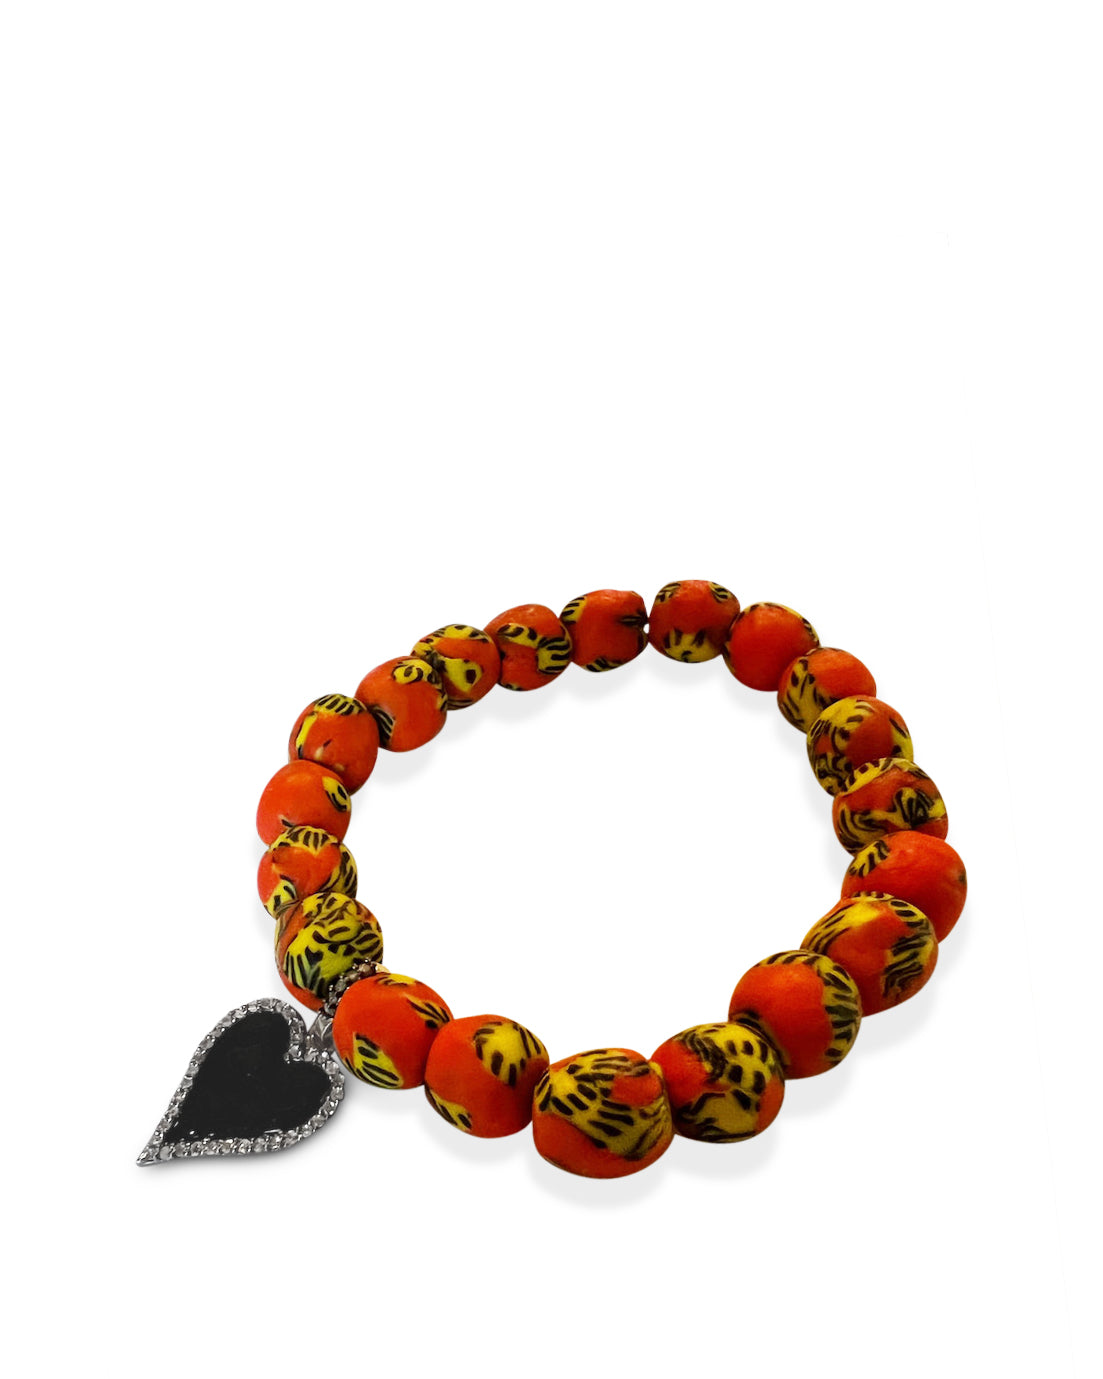 Krobo Beads from Ghana with Pave Diamond Black Enamel Heart